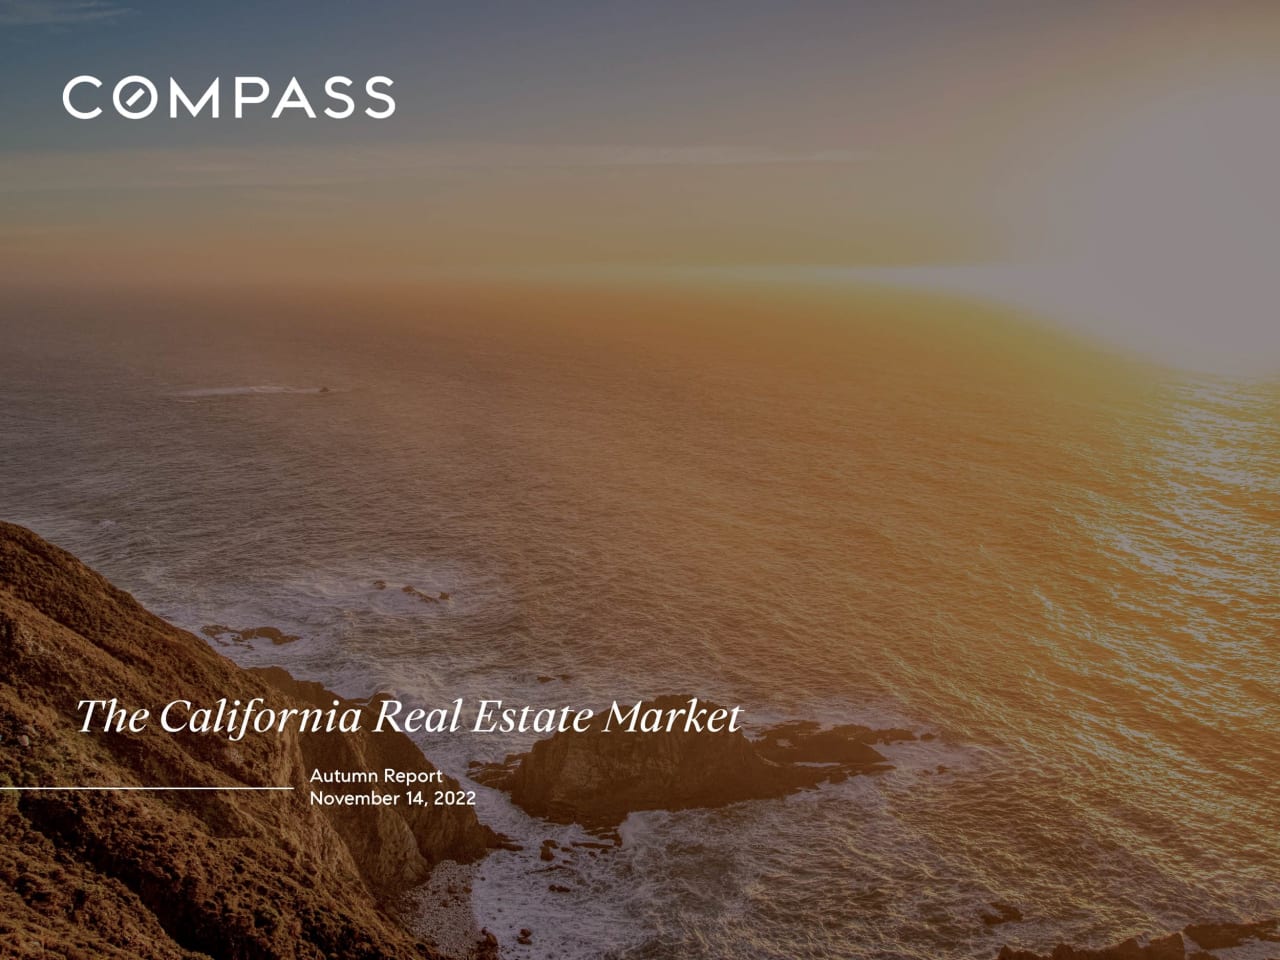 The California Real Estate Market Autumn Report